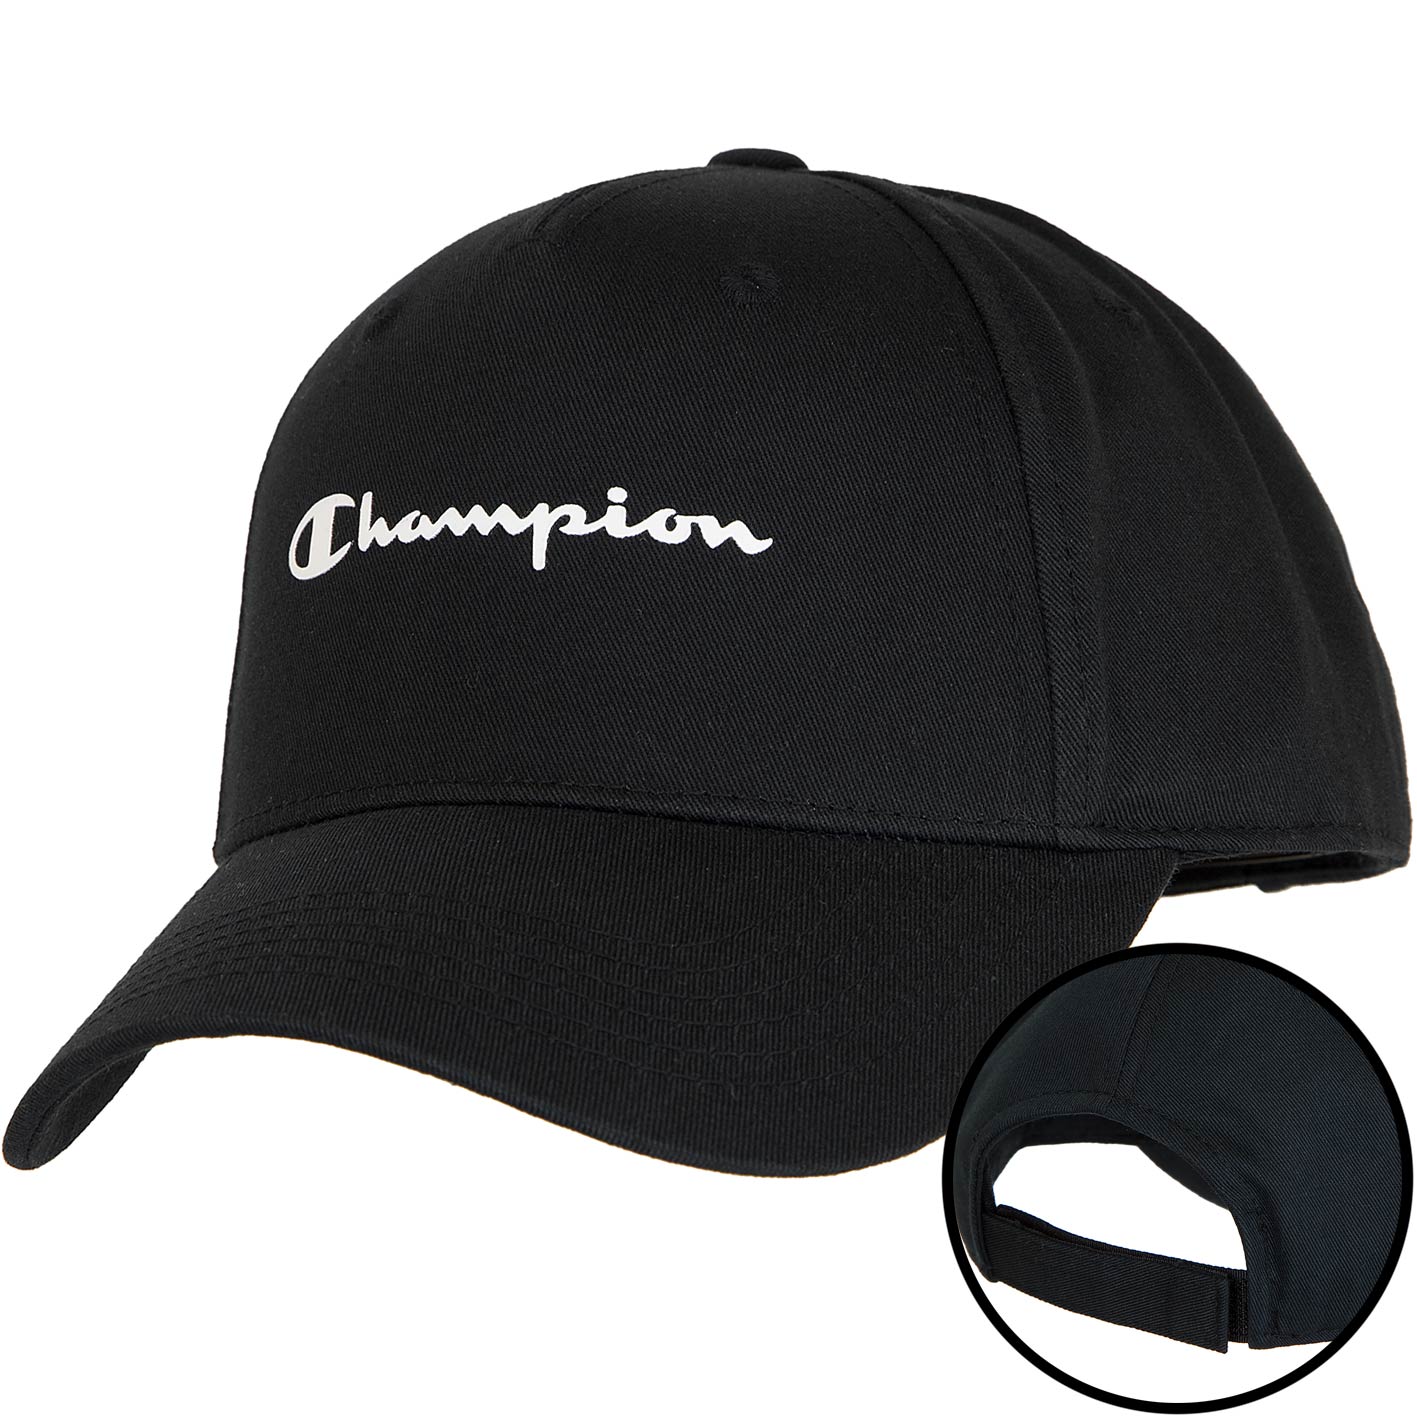 ☆ Champion Snapback Cap Baseball schwarz - hier bestellen!